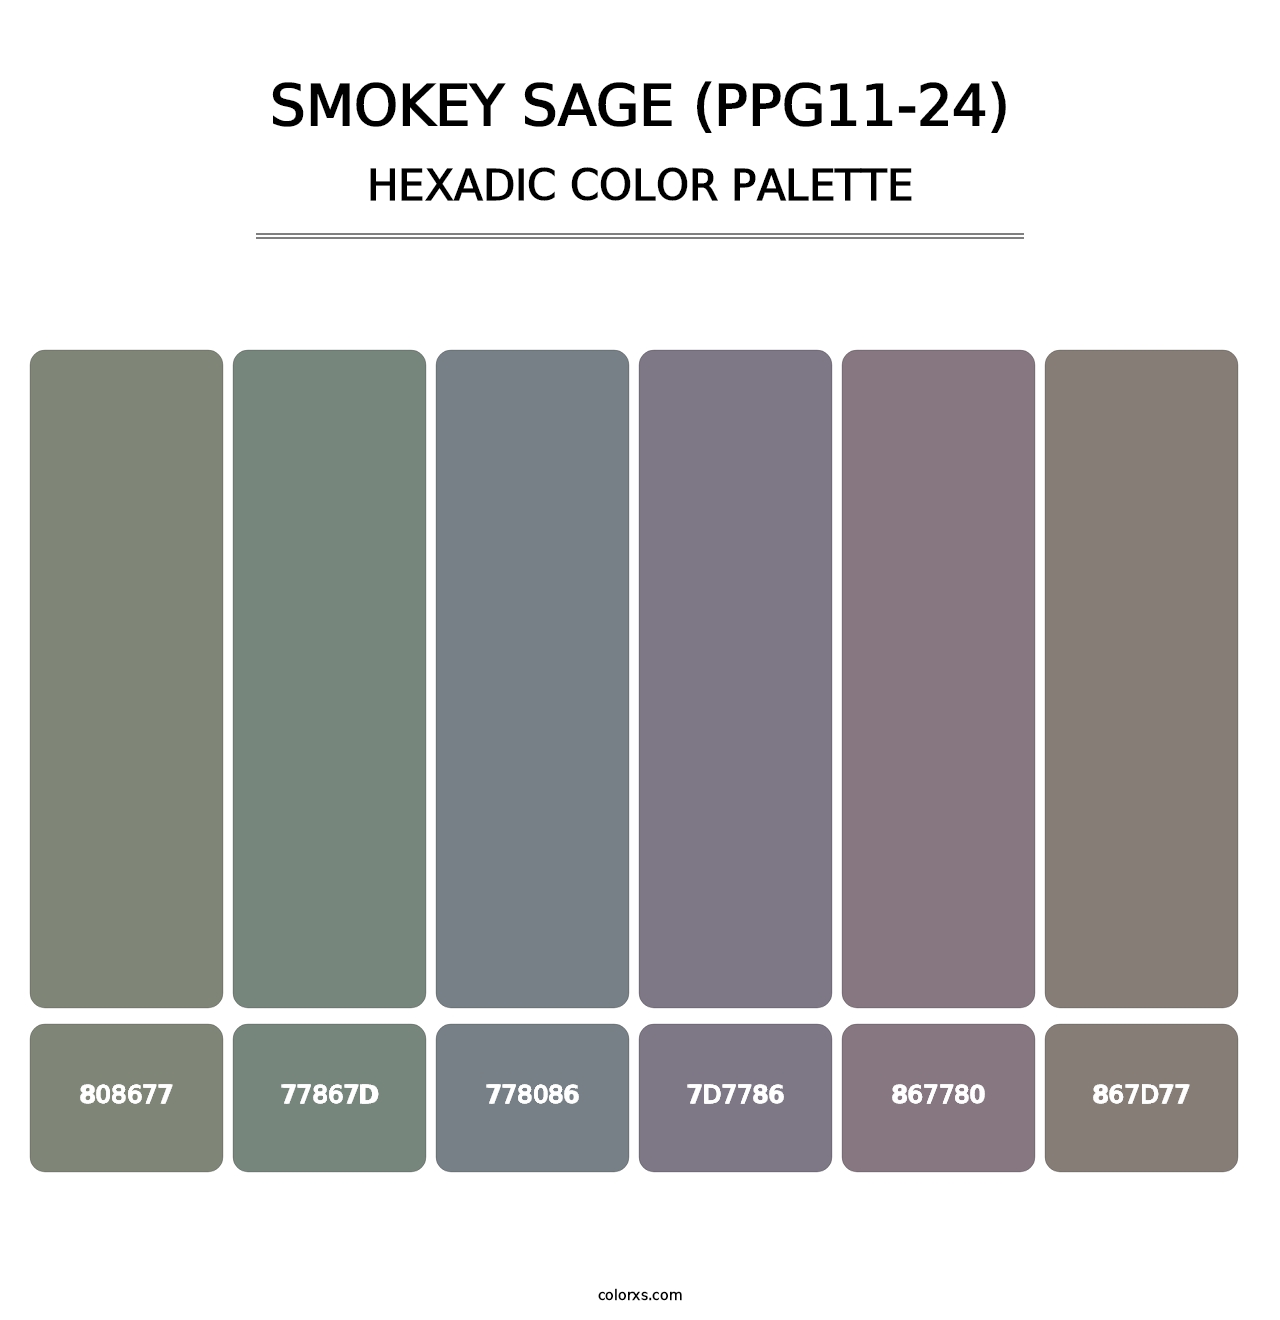 Smokey Sage (PPG11-24) - Hexadic Color Palette